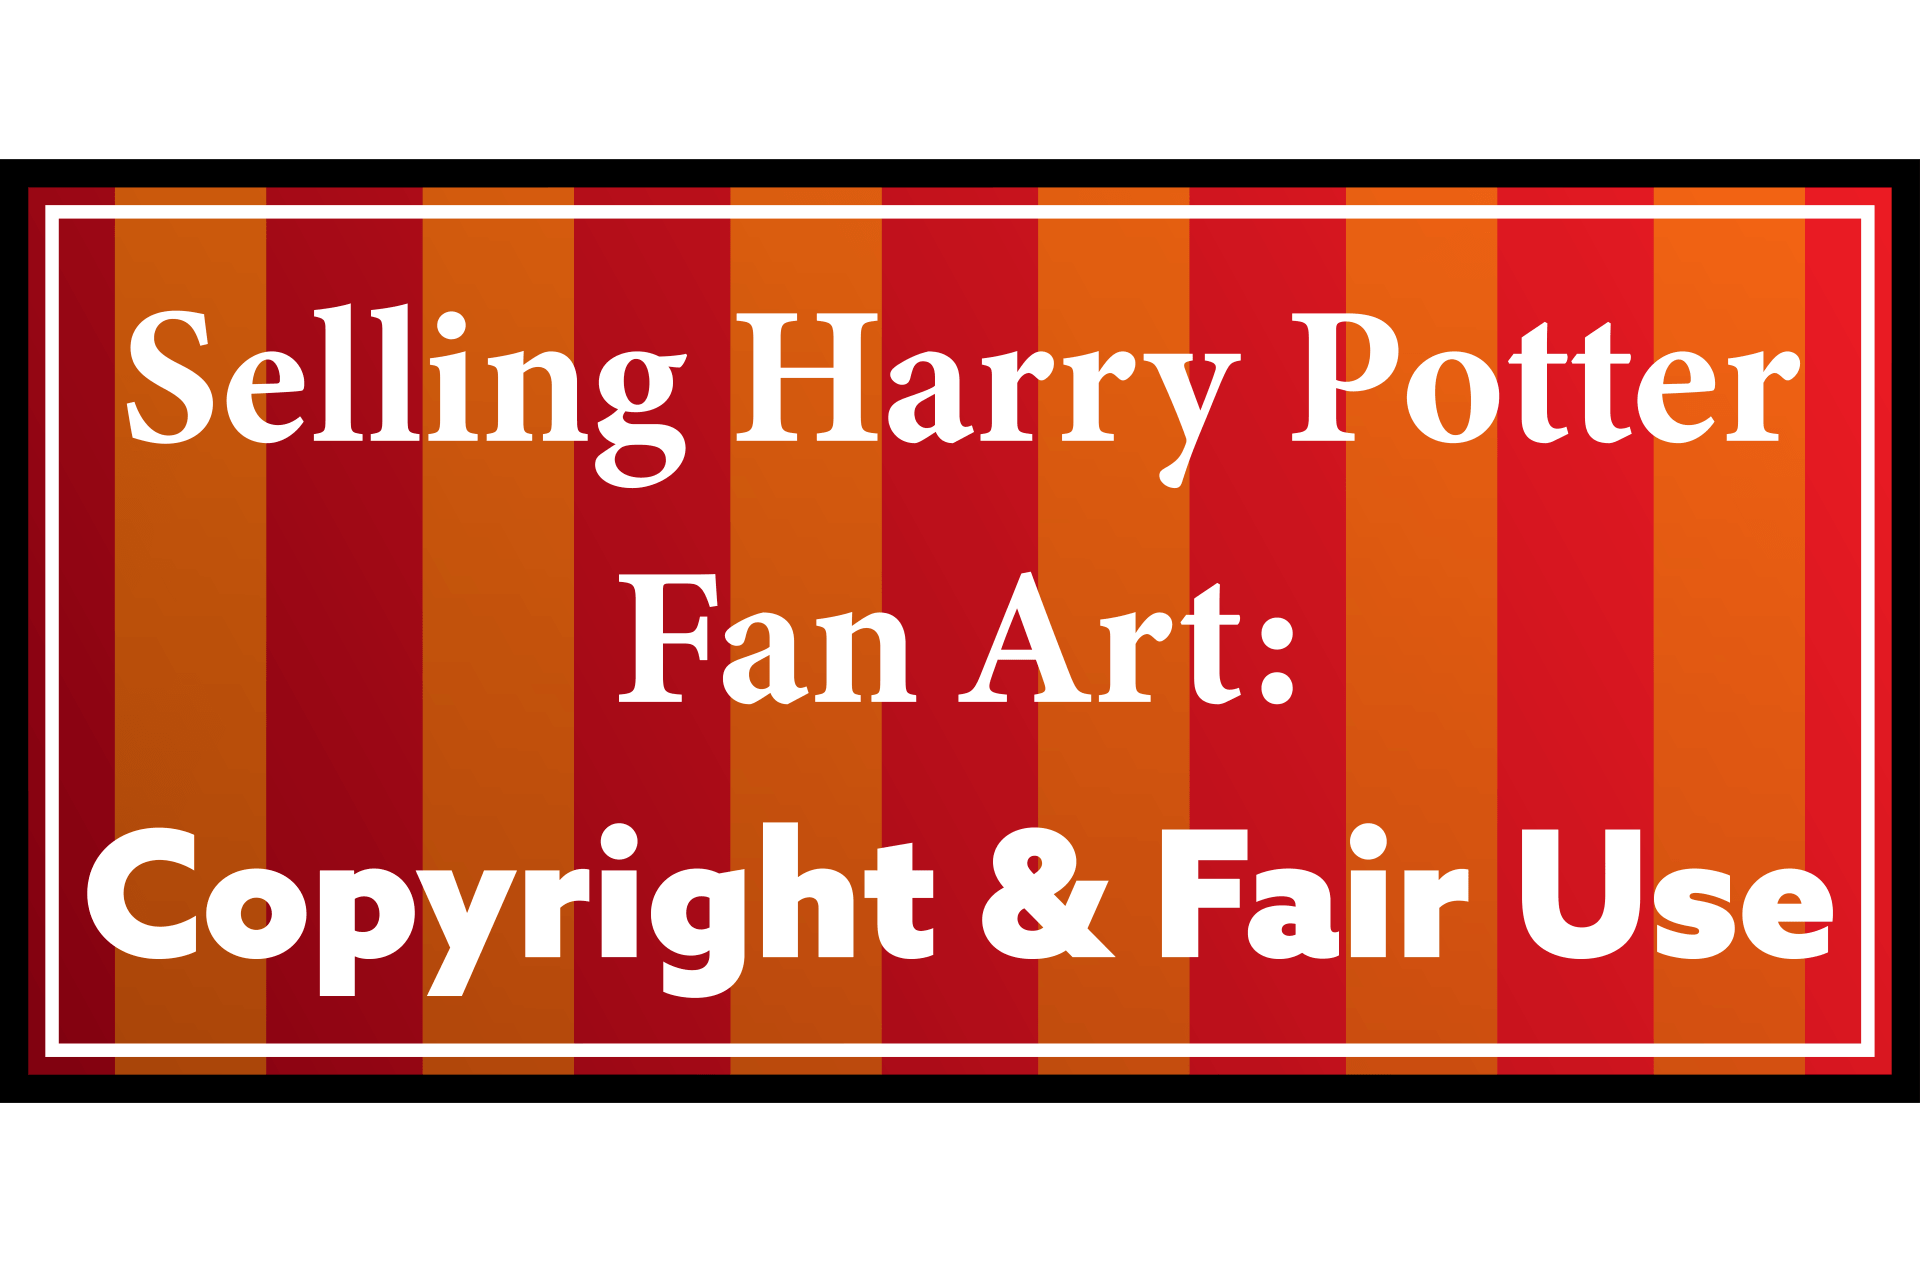 Selling Harry Potter Fan Art on Etsy & Copyright Infringement